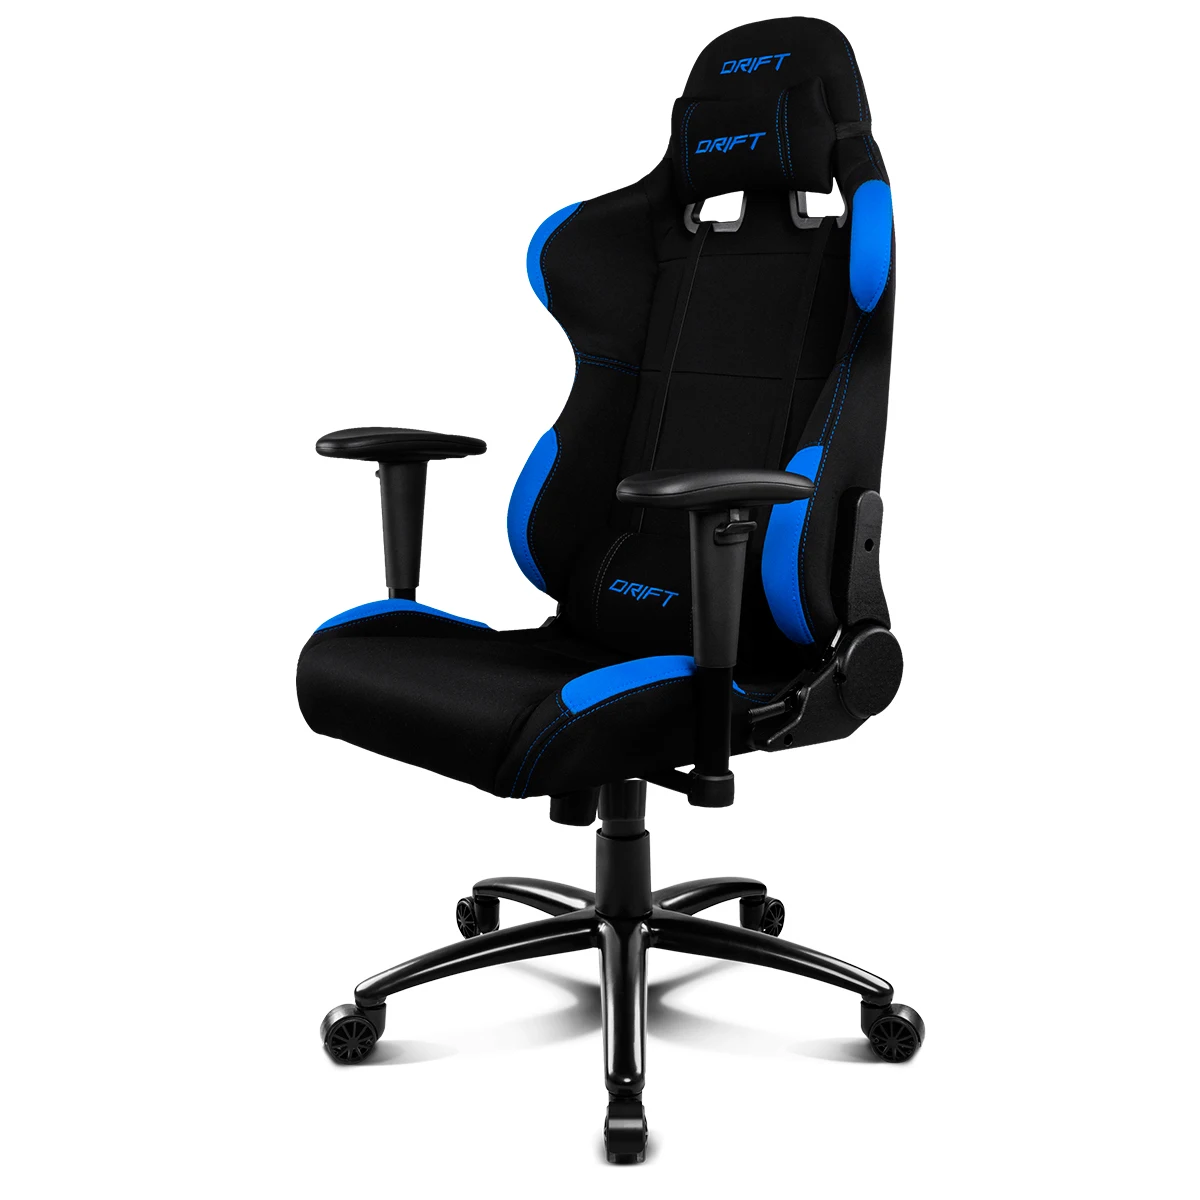 Кресло drift. Игровое кресло Drift dr250 PU Leather / Black/Red. Drift dr100. Игровое кресло Drift dr111 PU Leather / Black/Blue. Игровое кресло зомби ранер черный.